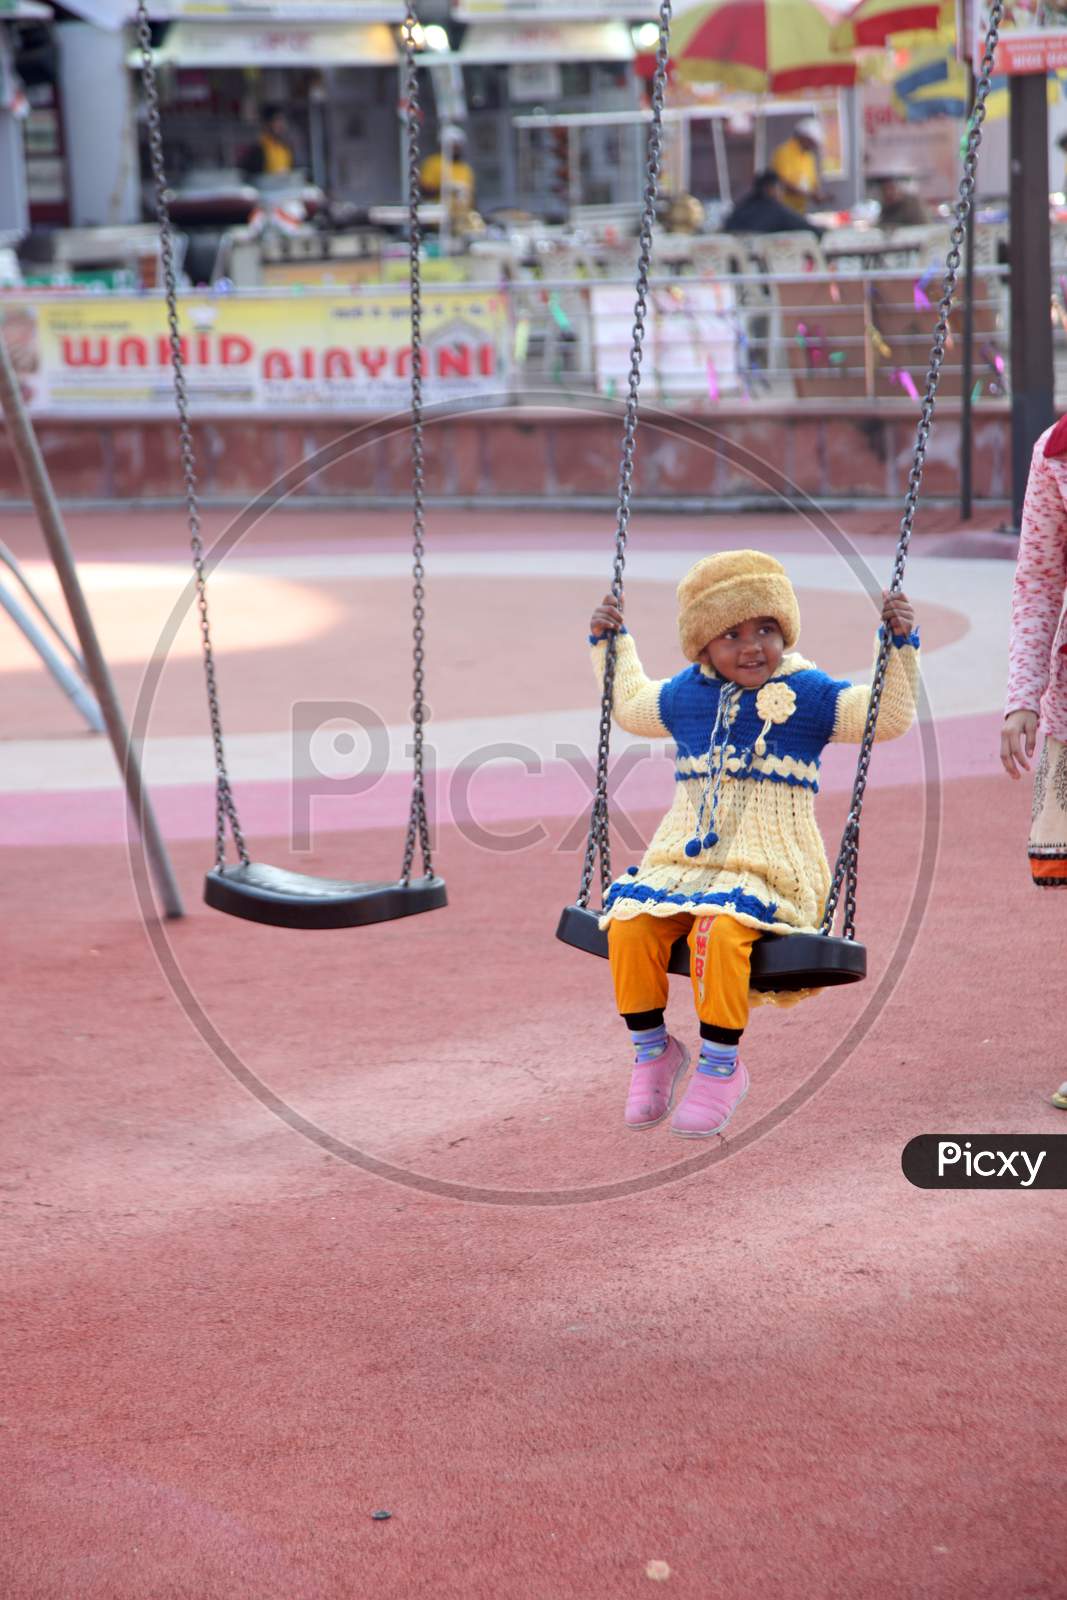 Portrait of an Indian Kid on Swing